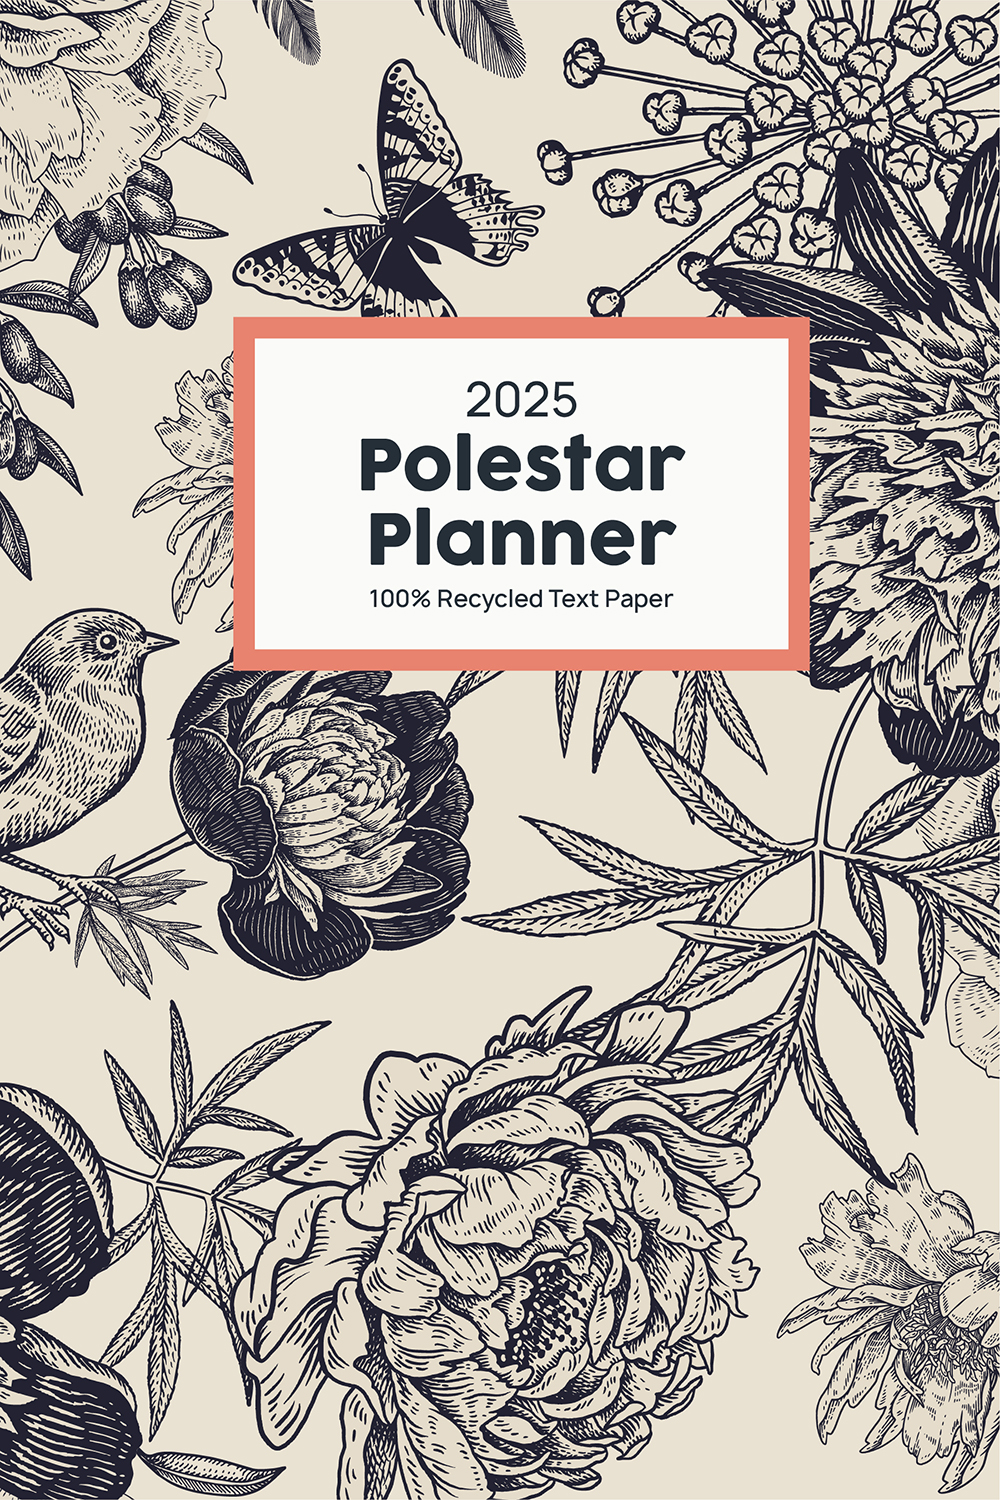 2025 Polestar Planner